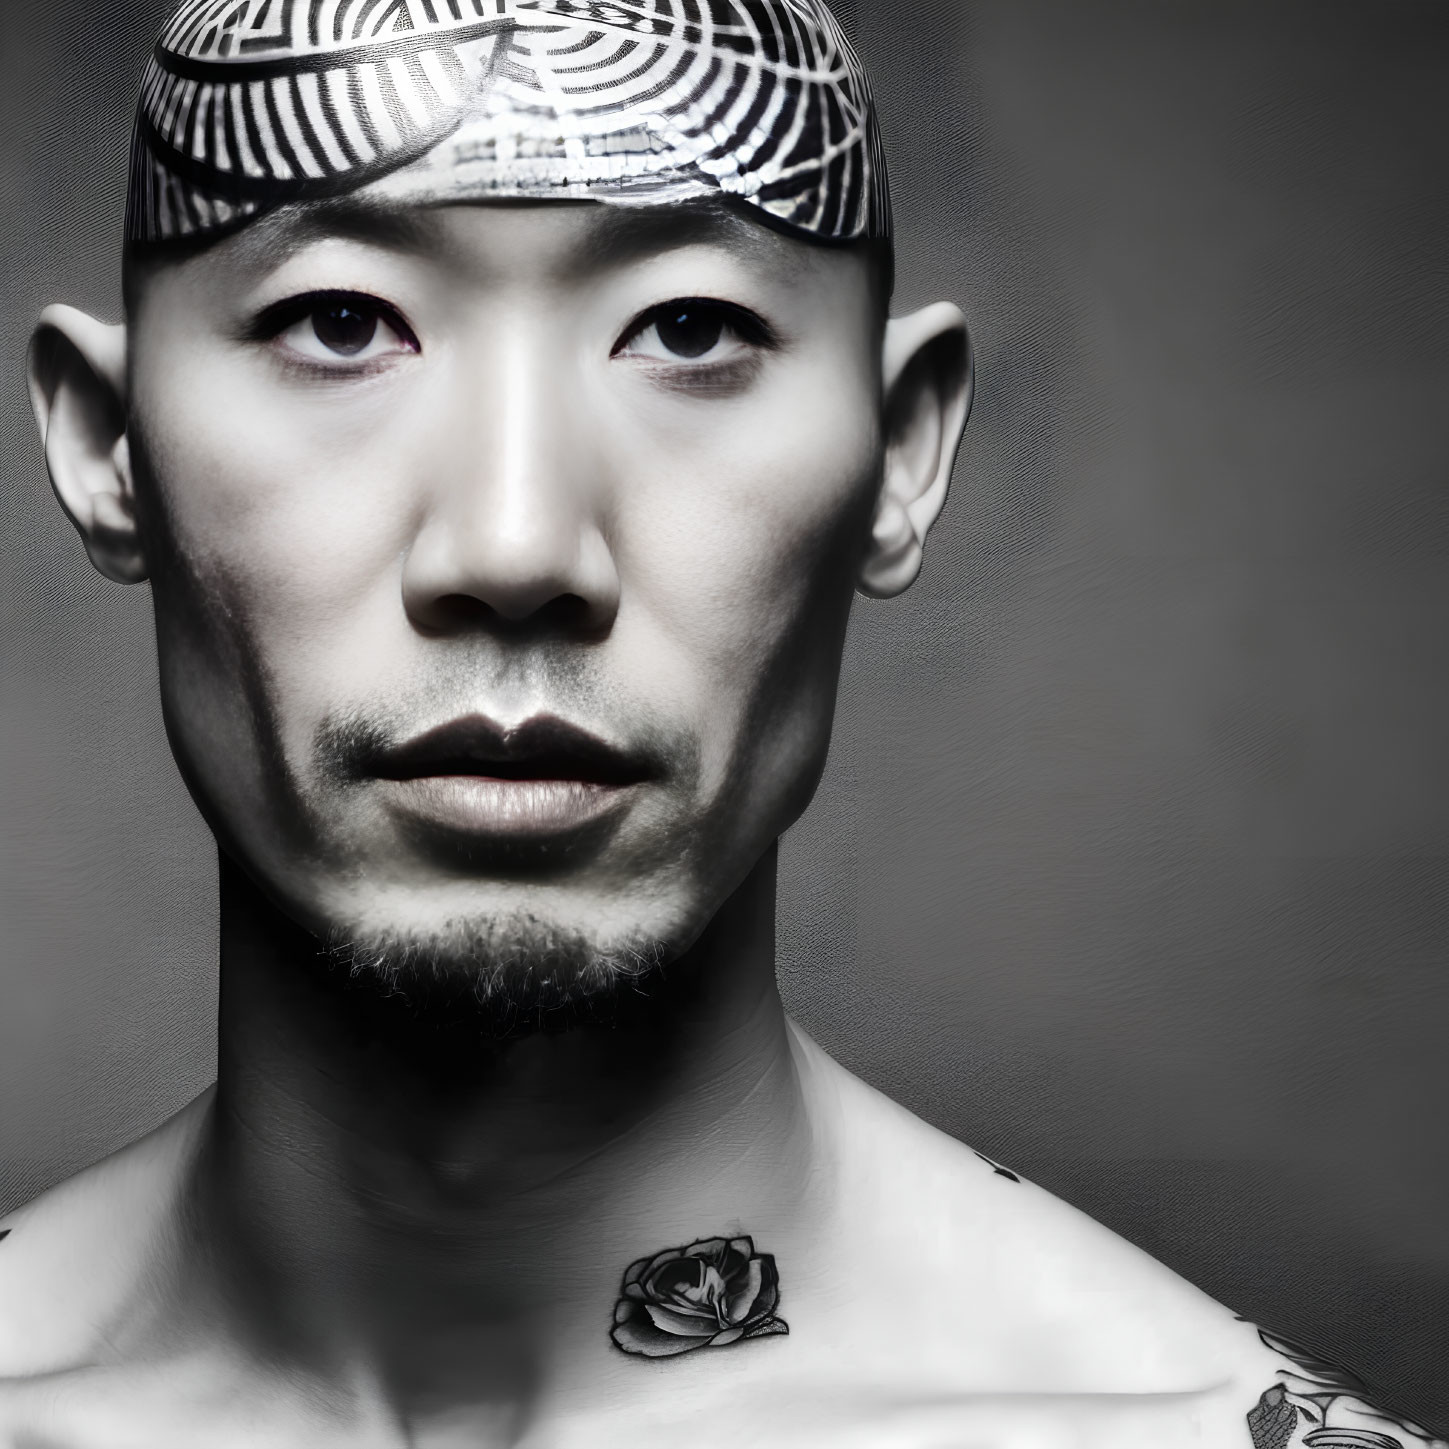 Grayscale portrait of man with headband, goatee, tattoos